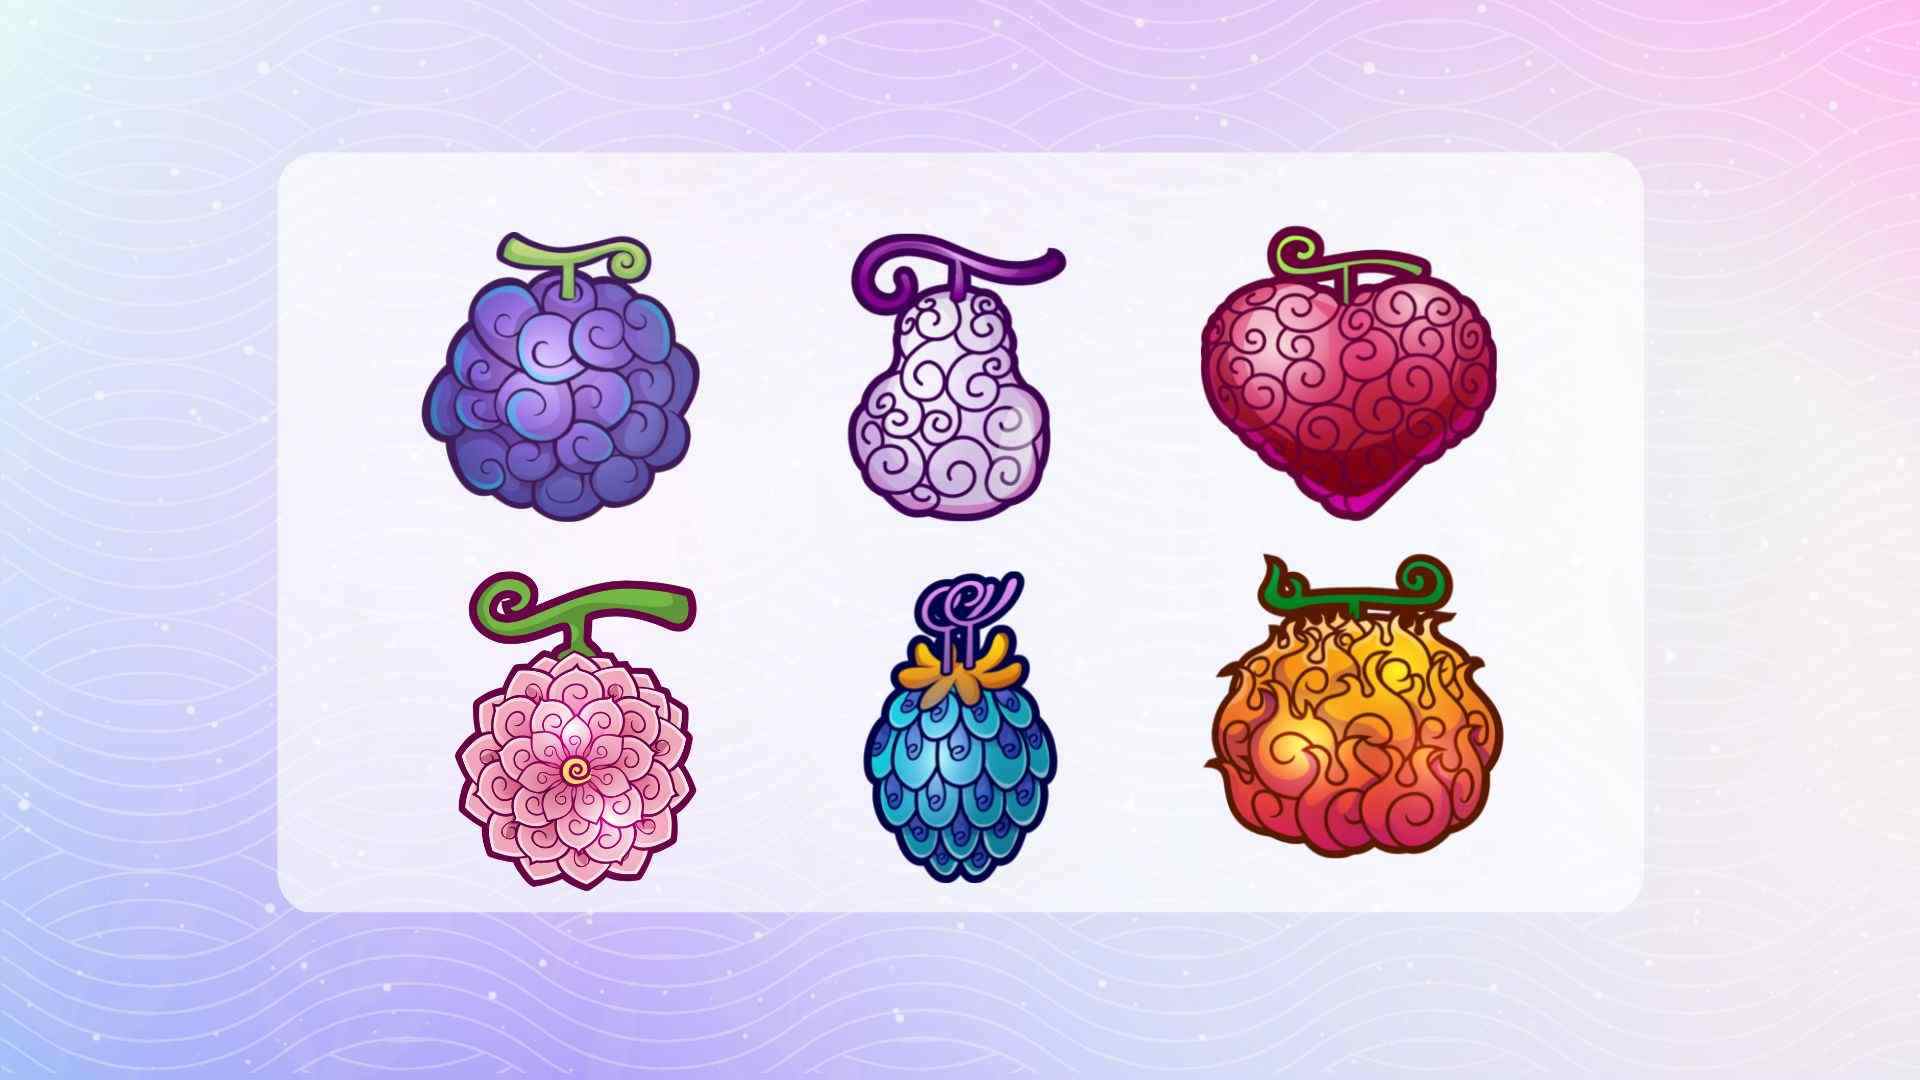 Hình vẽ tất cả Devil Fruit có trong Blox Fruit